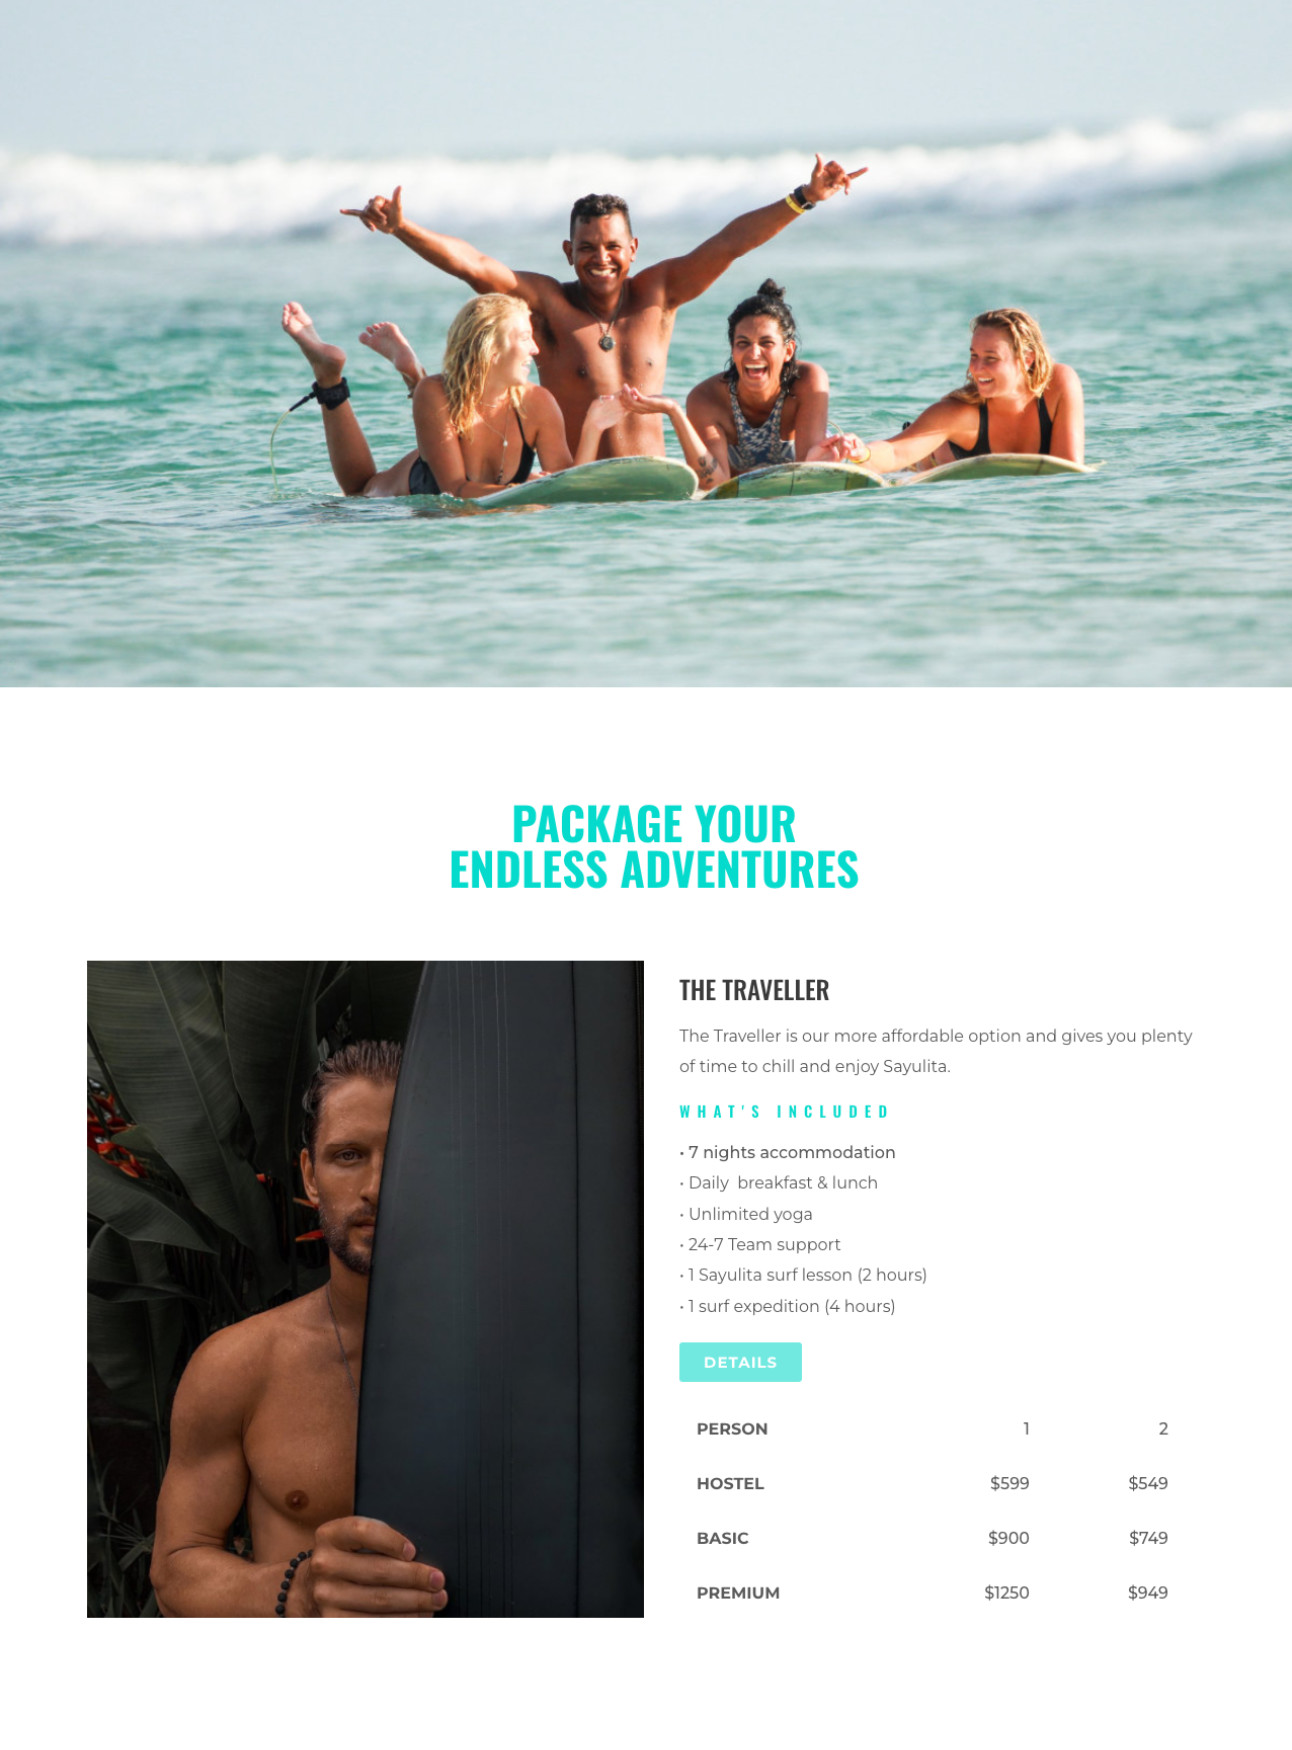 Sayulita surf camp website packages page